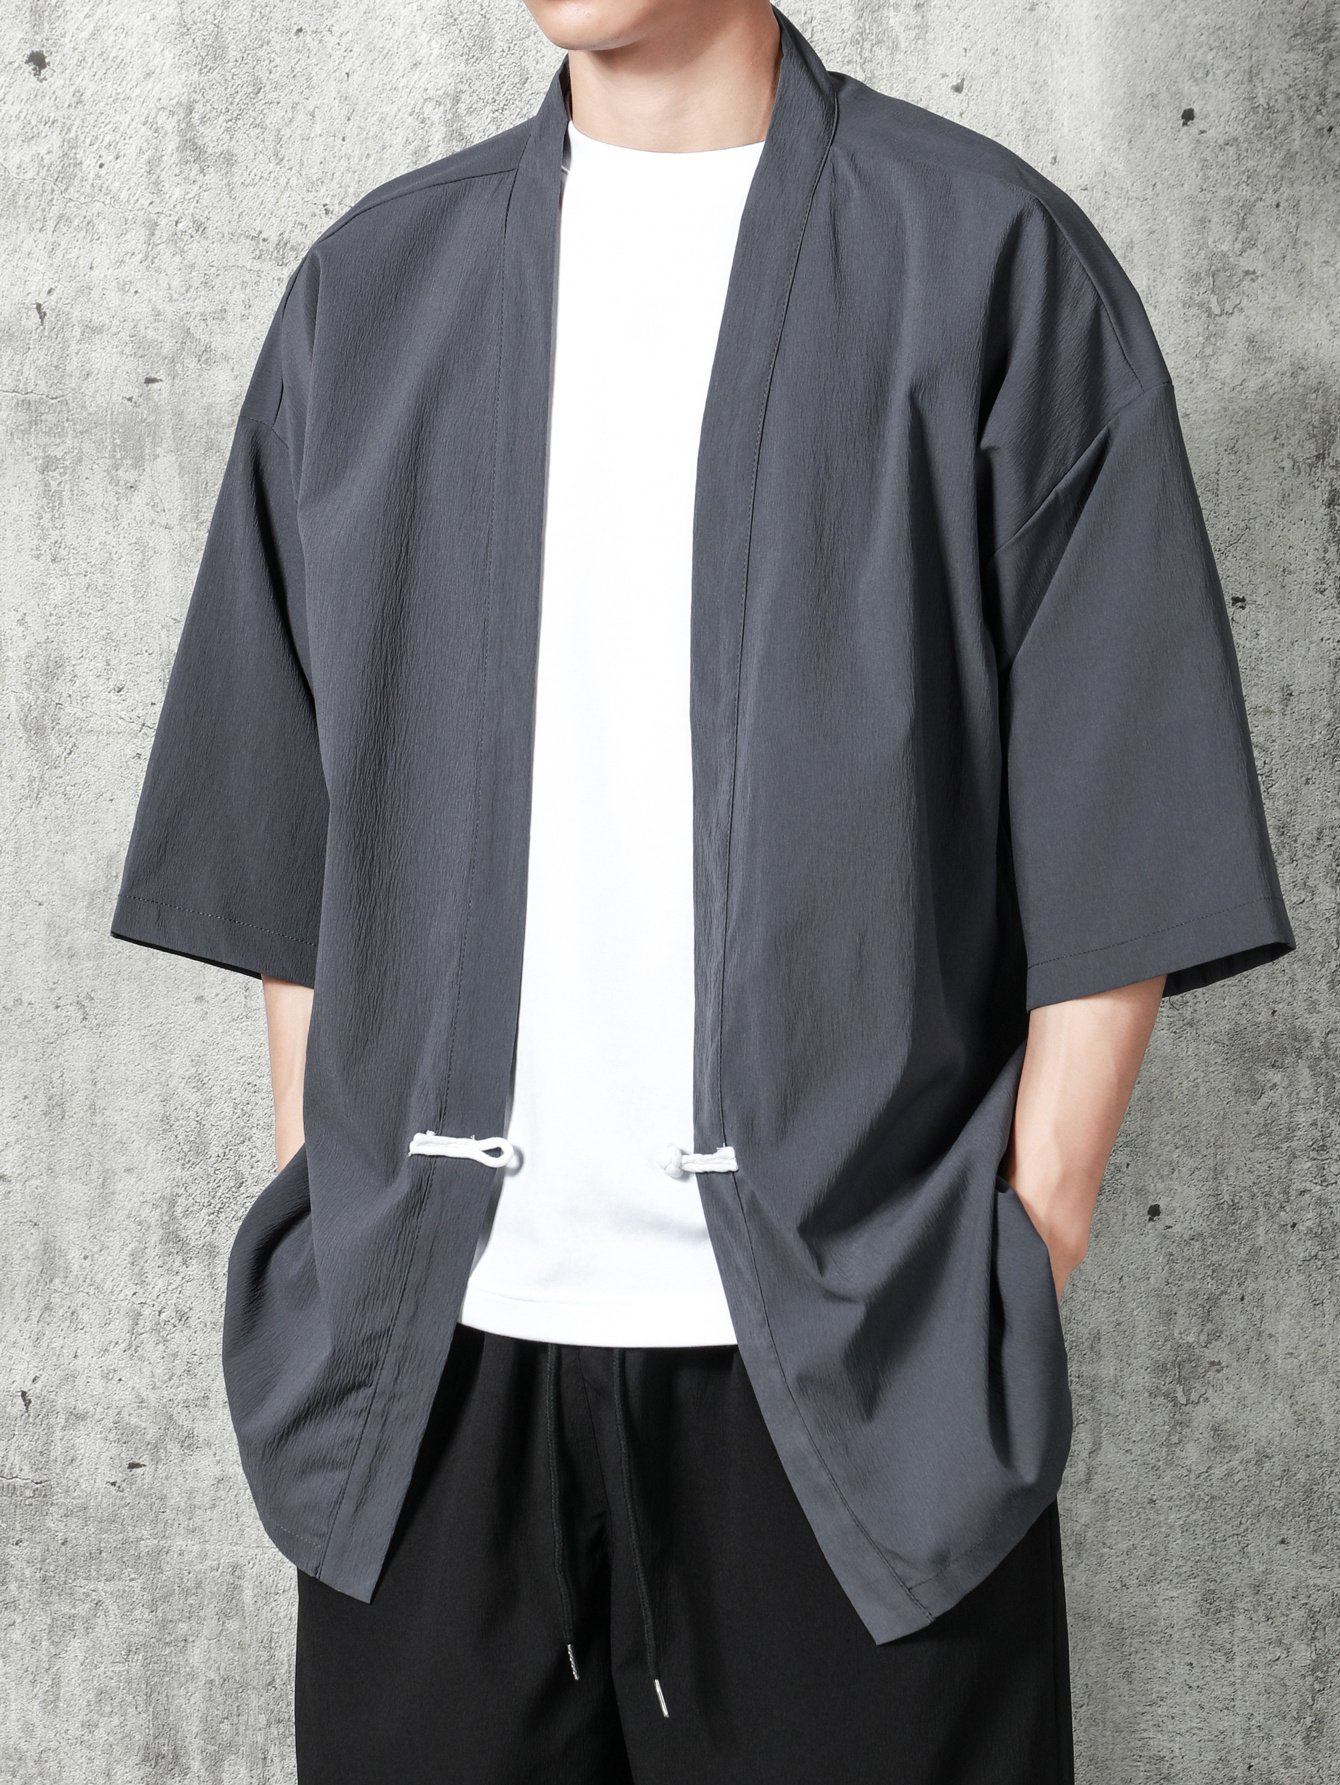 Korean Men's Fashion Youth short-sleeved Loose Casual zipper Shirt top 